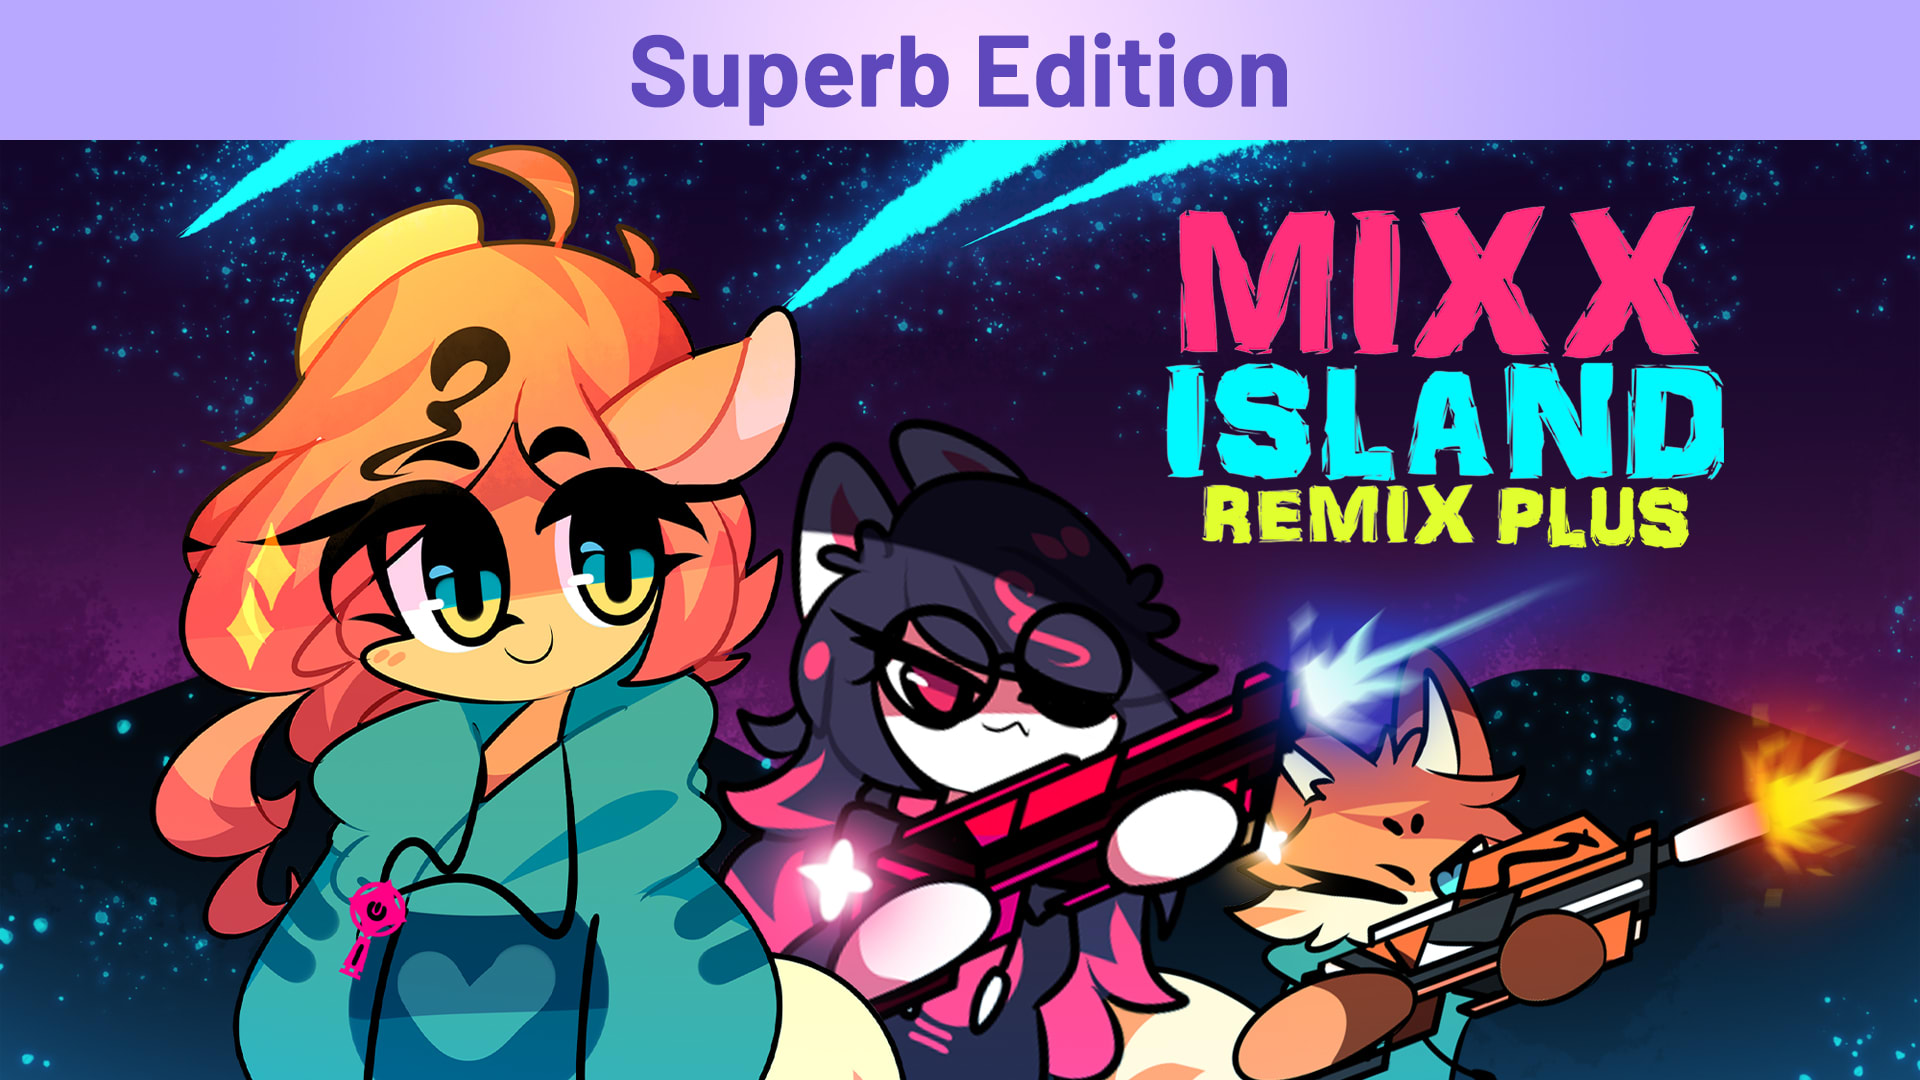 Mixx Island: Remix Plus Superb Edition